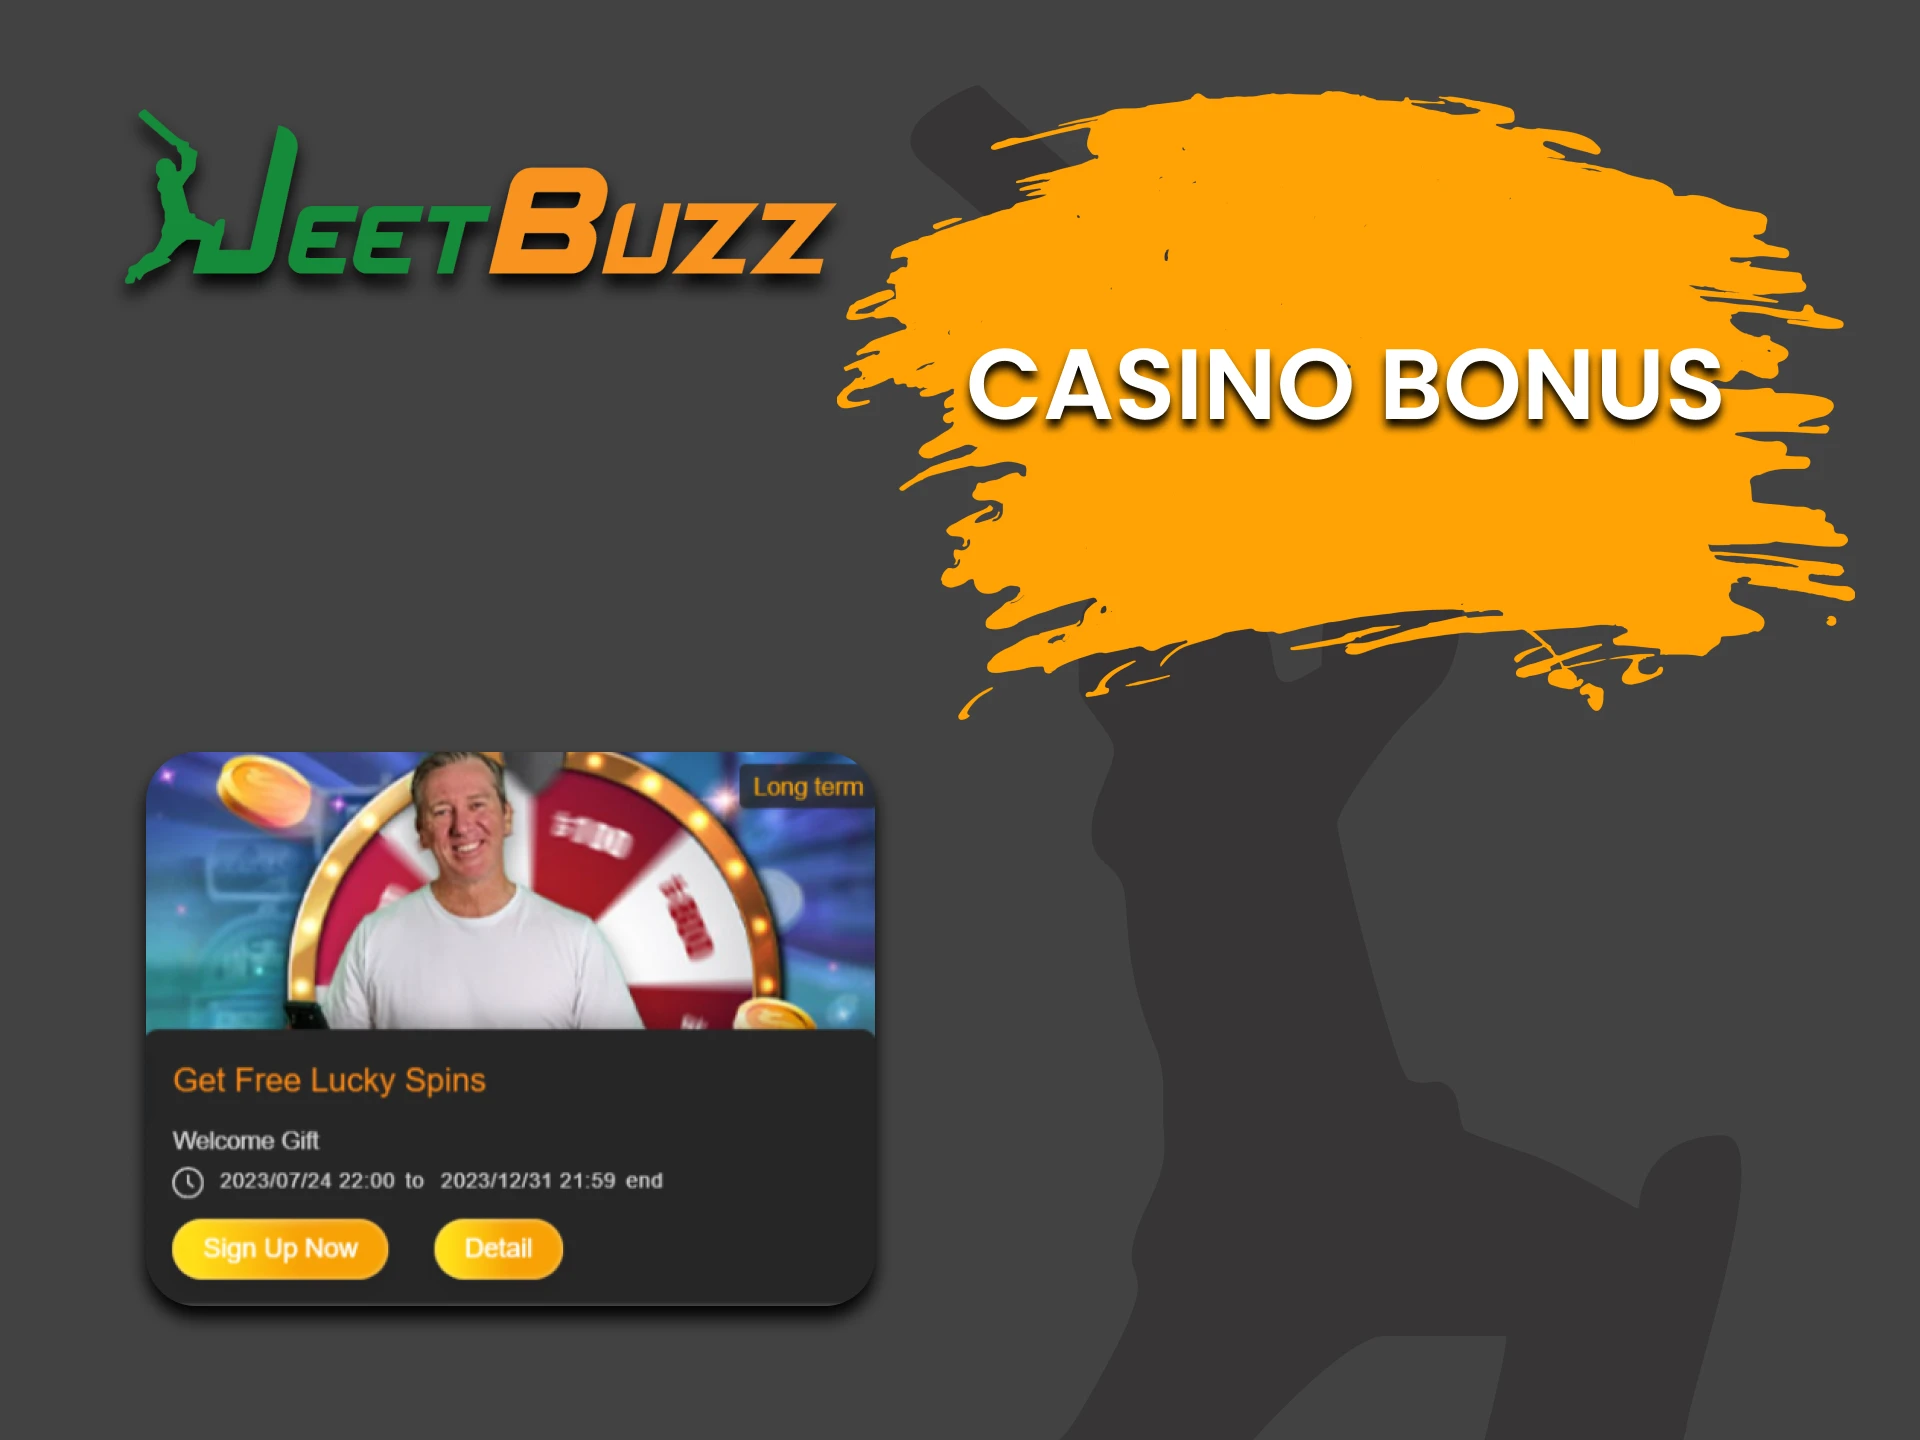 JeetBuzz gives a casino bonus.